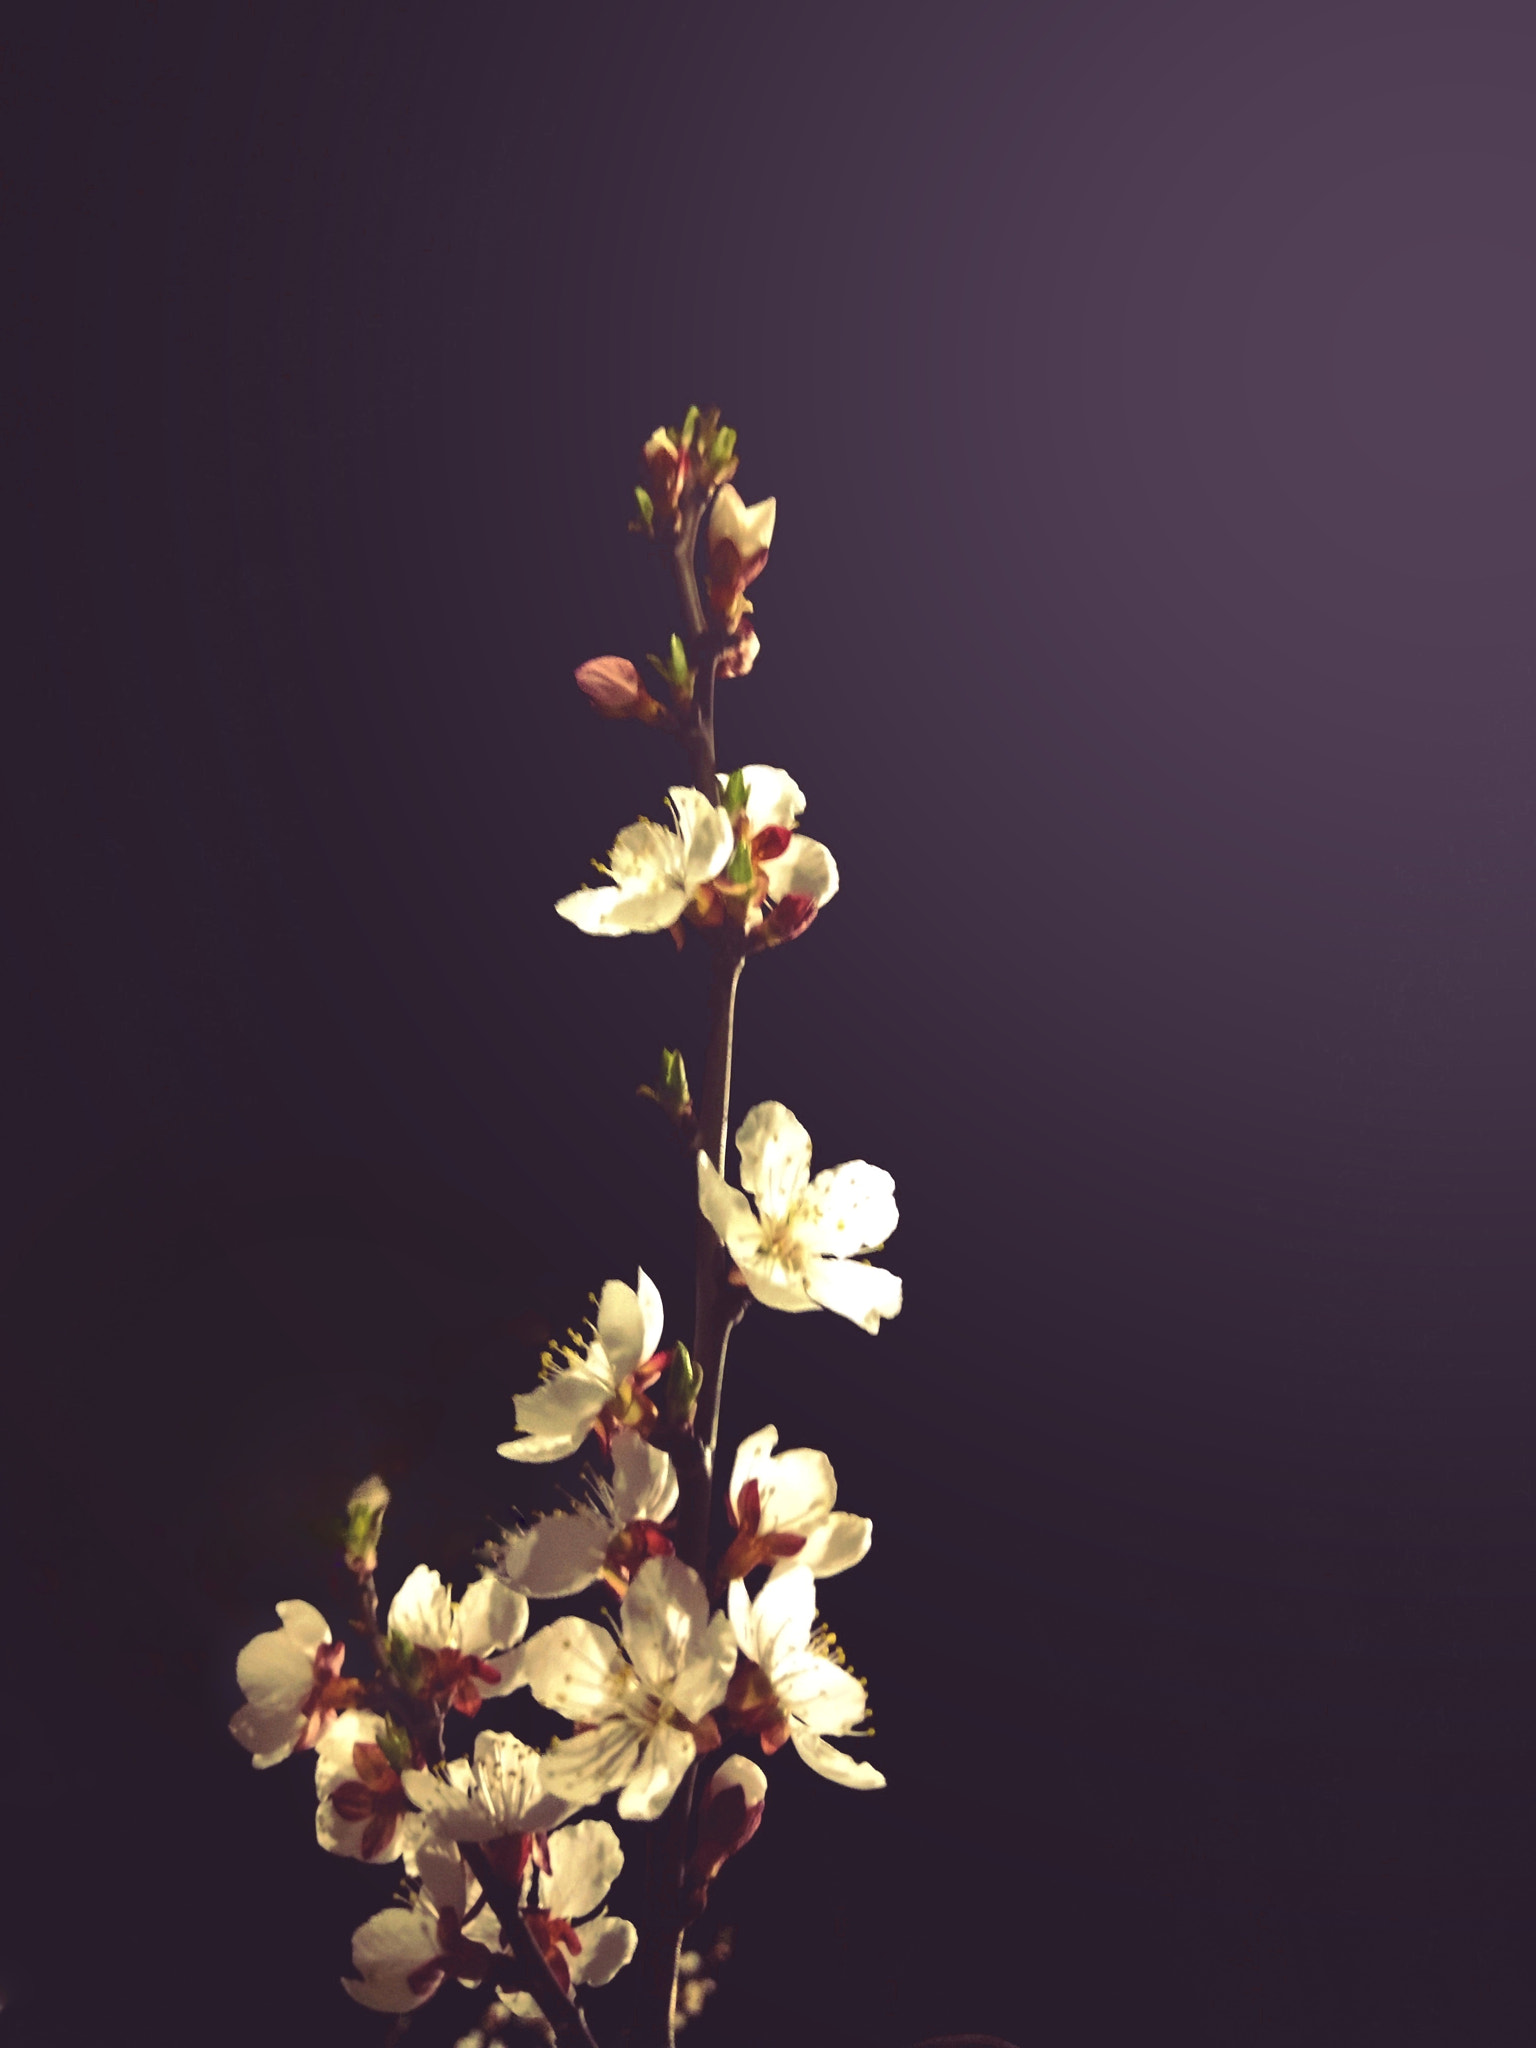 HTC U11+ sample photo. Flowers at night photography